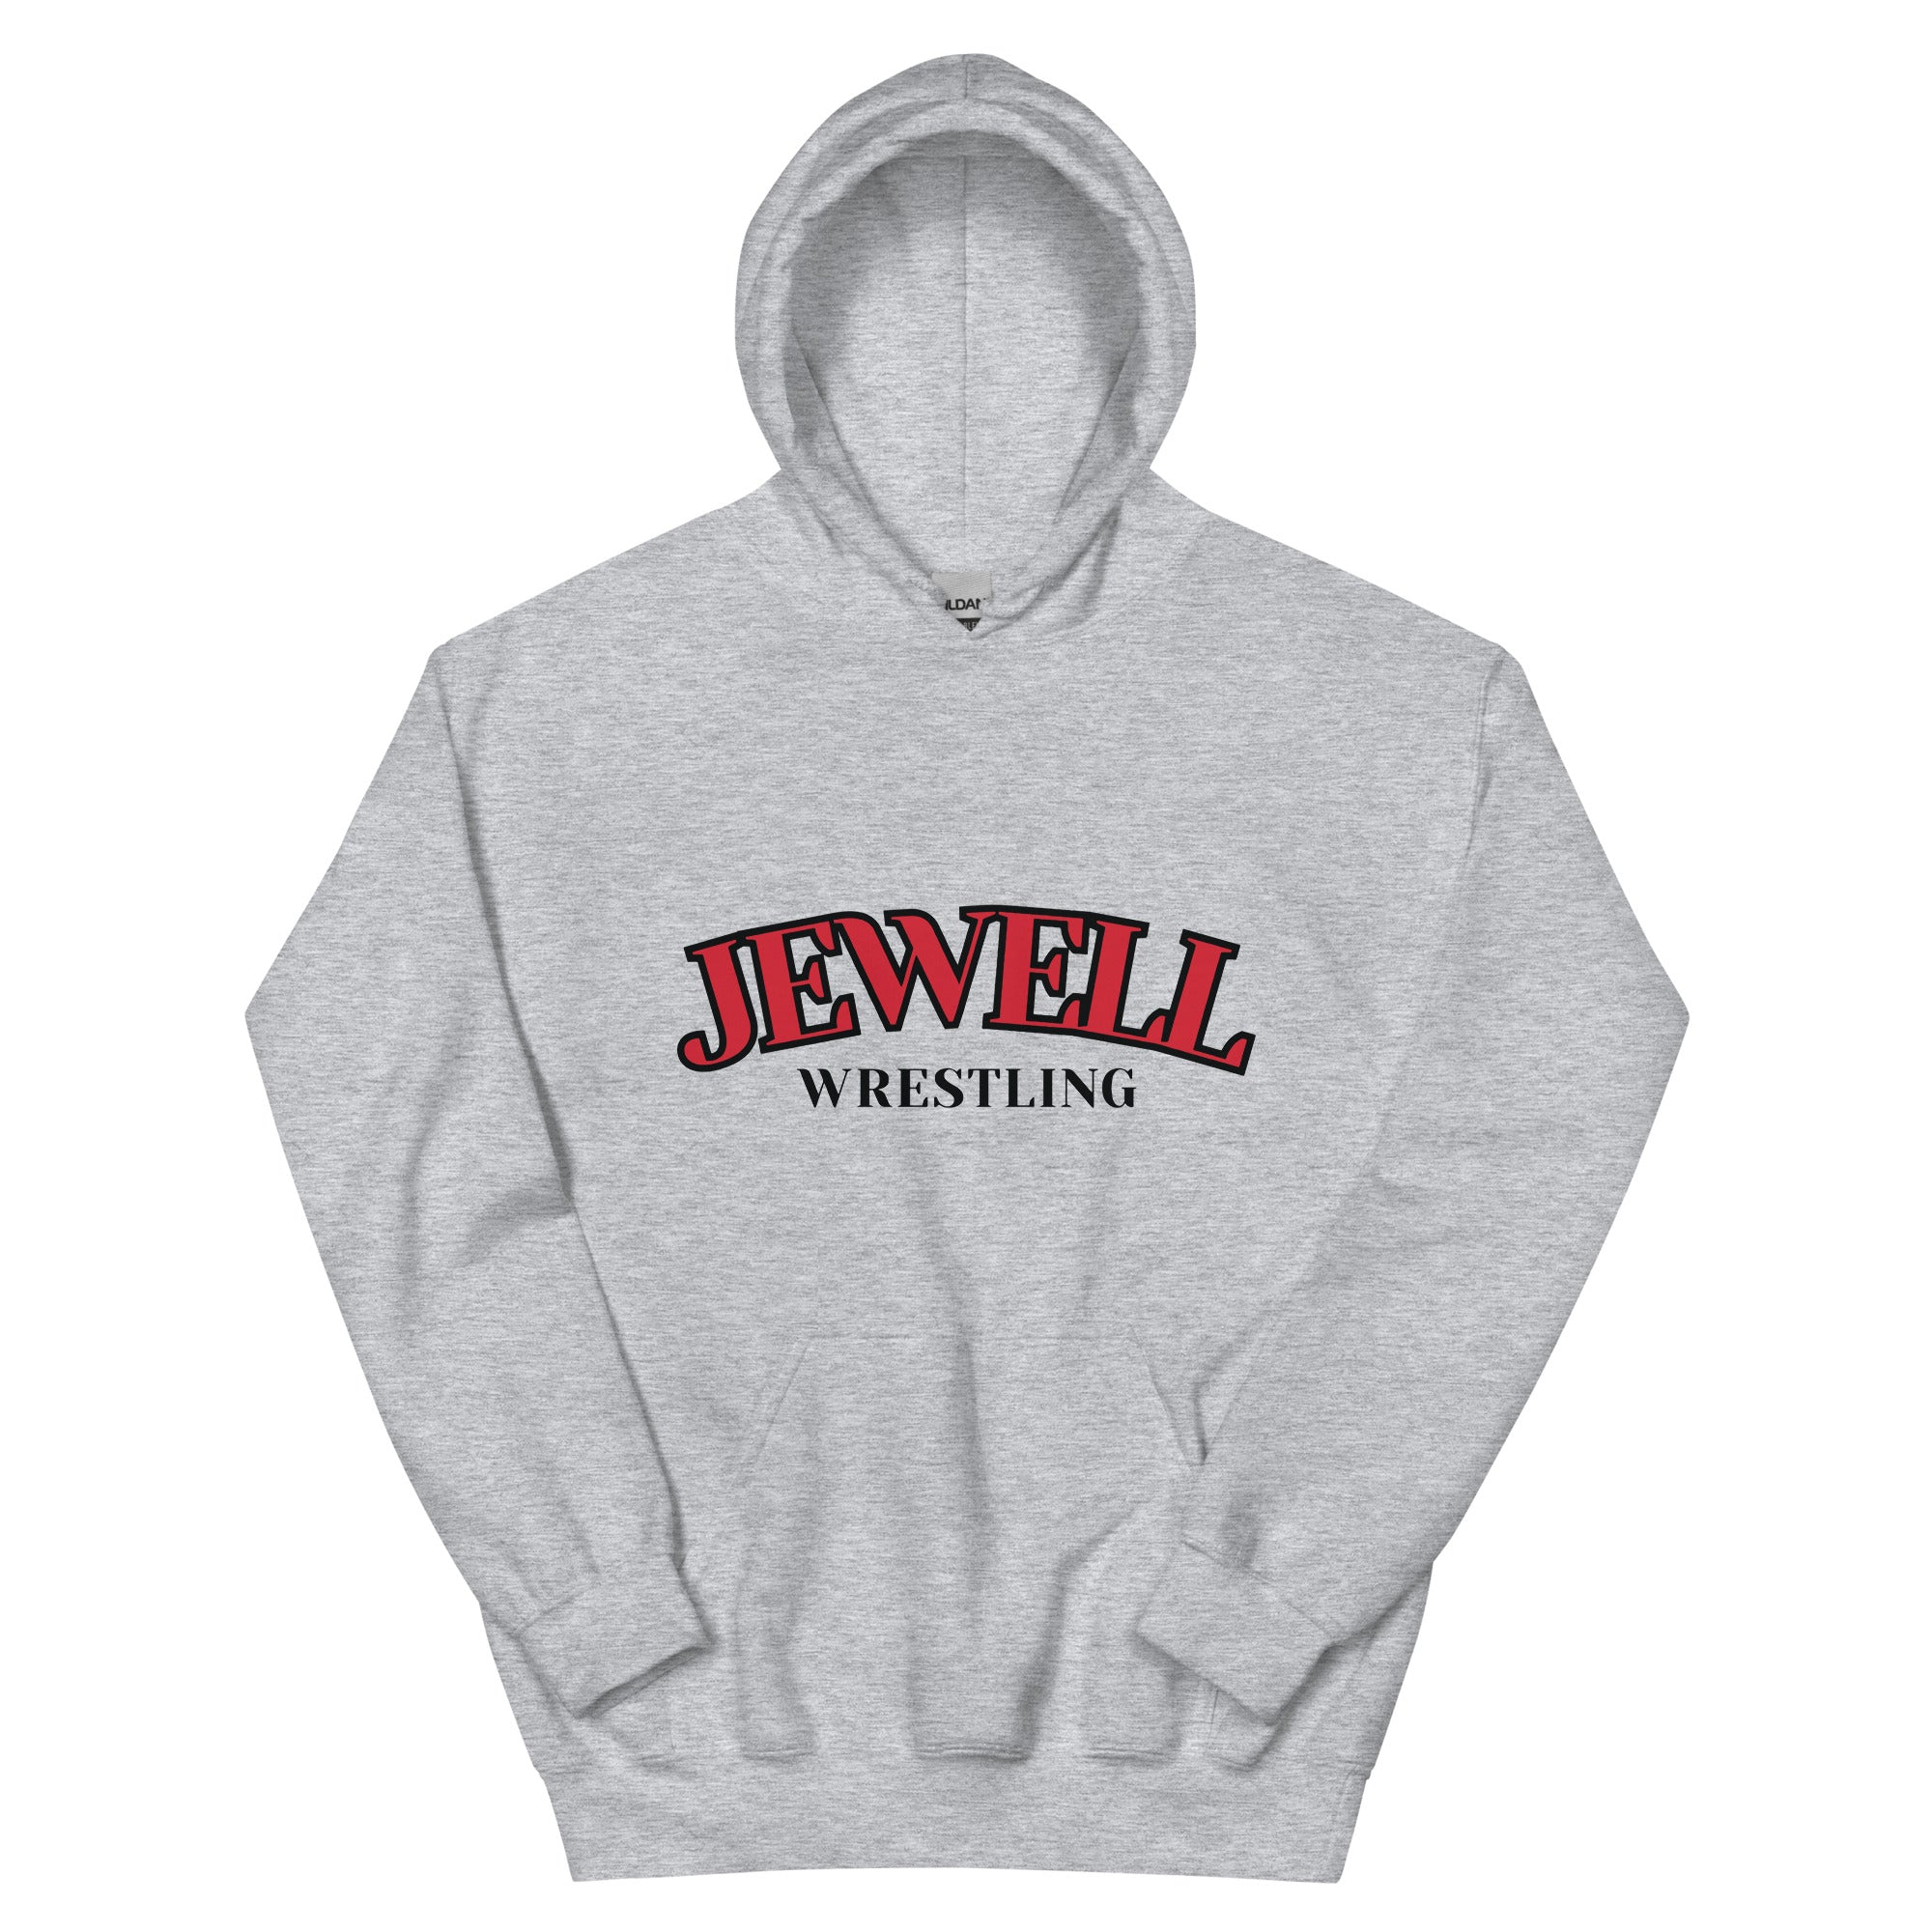 William Jewell Wrestling Jewell Arch Unisex Heavy Blend Hoodie